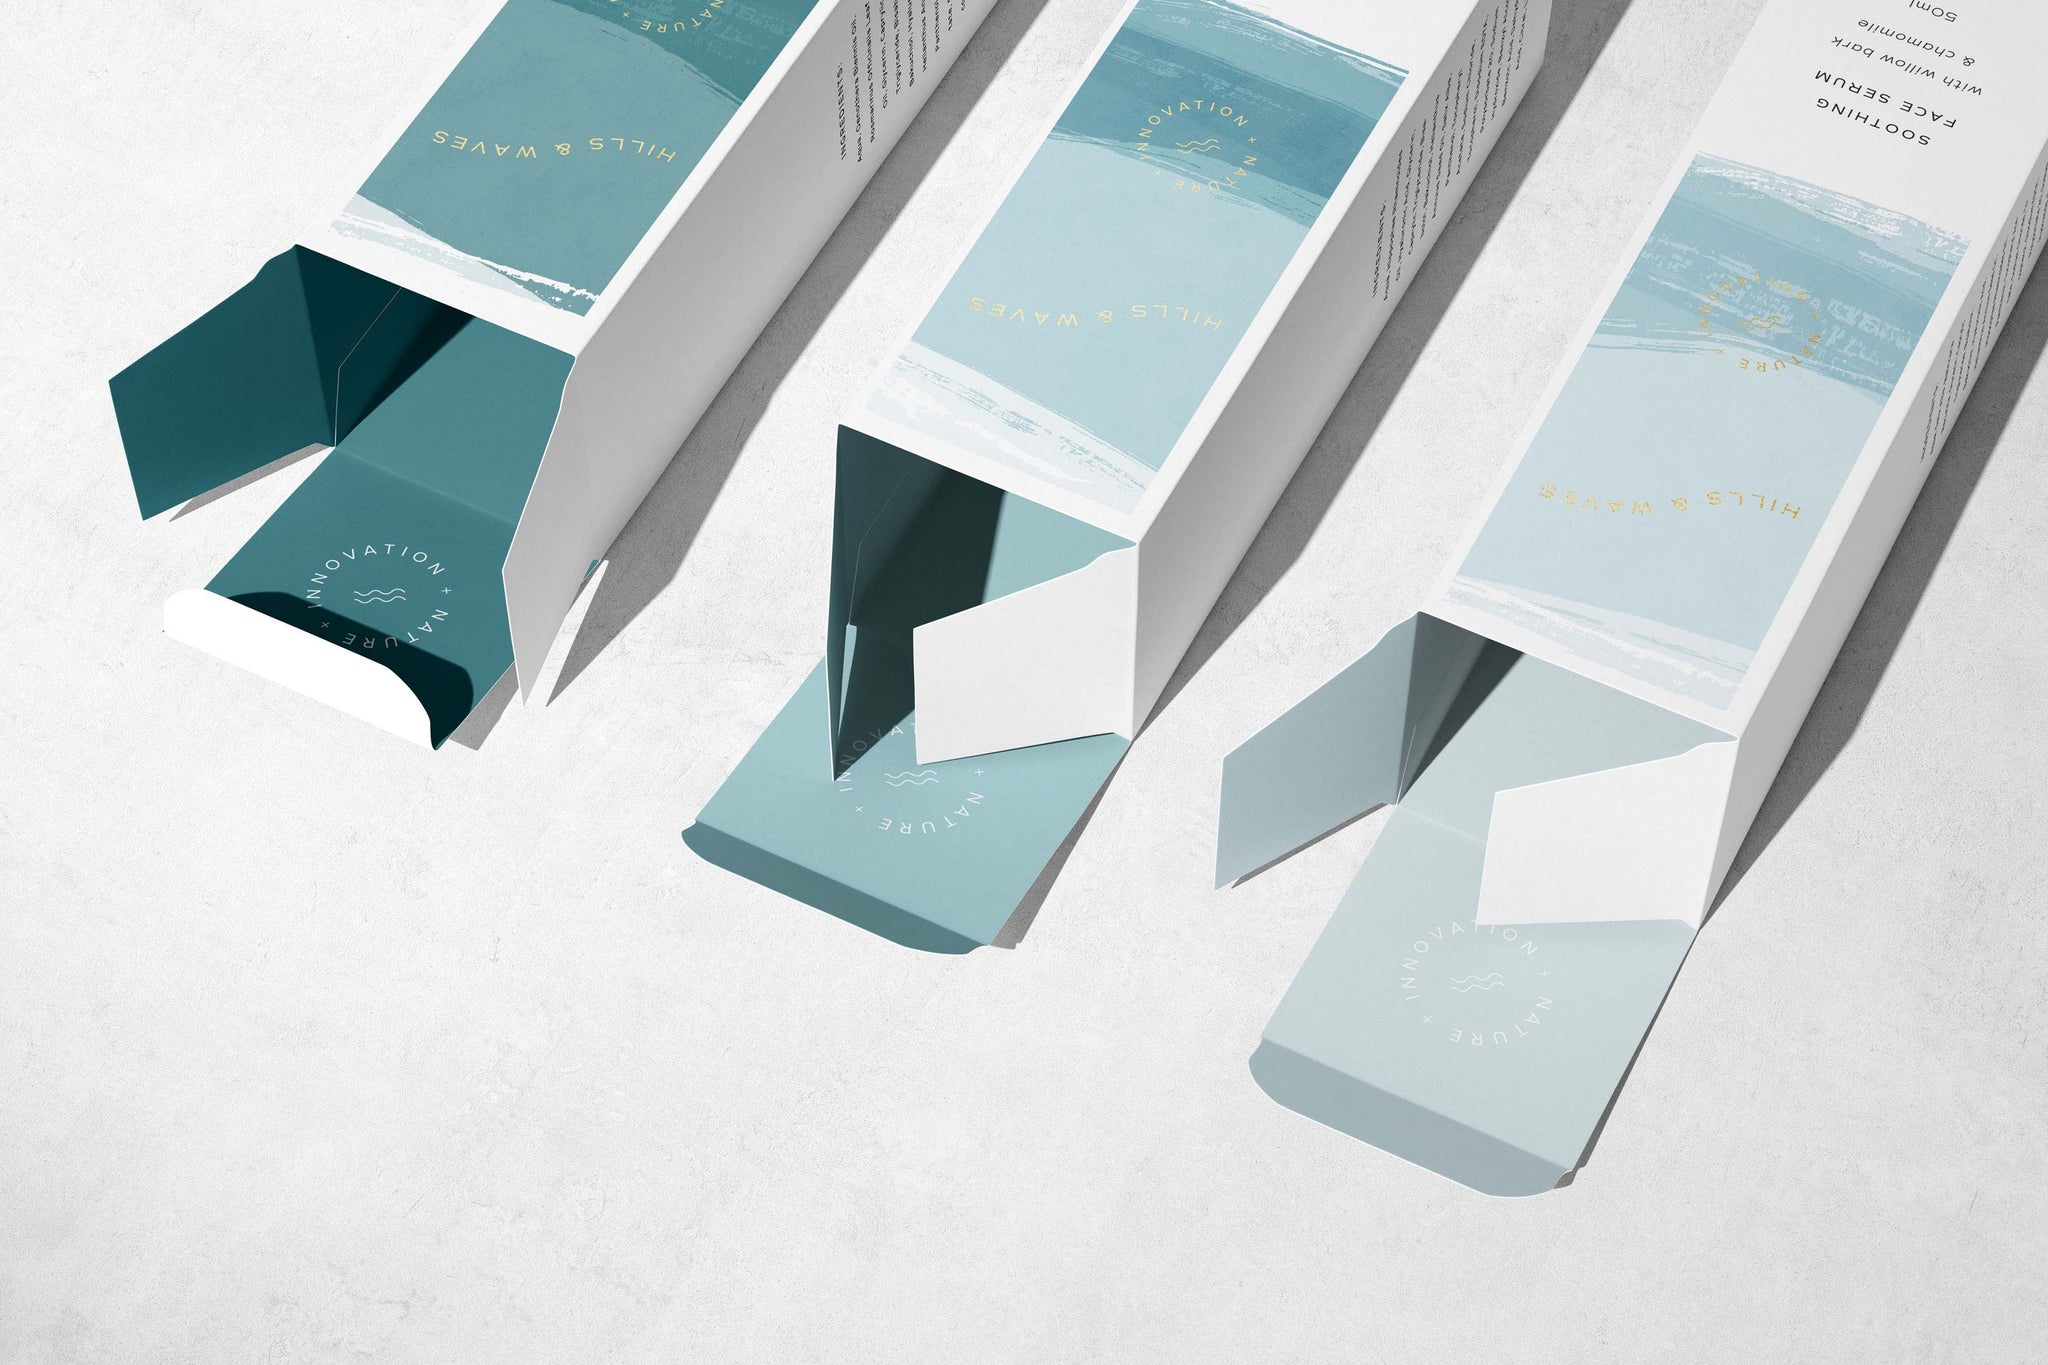 Karolina Król Studio Hills & Waves minimalist brand identity and sustainable packaging design for sustainable face serum